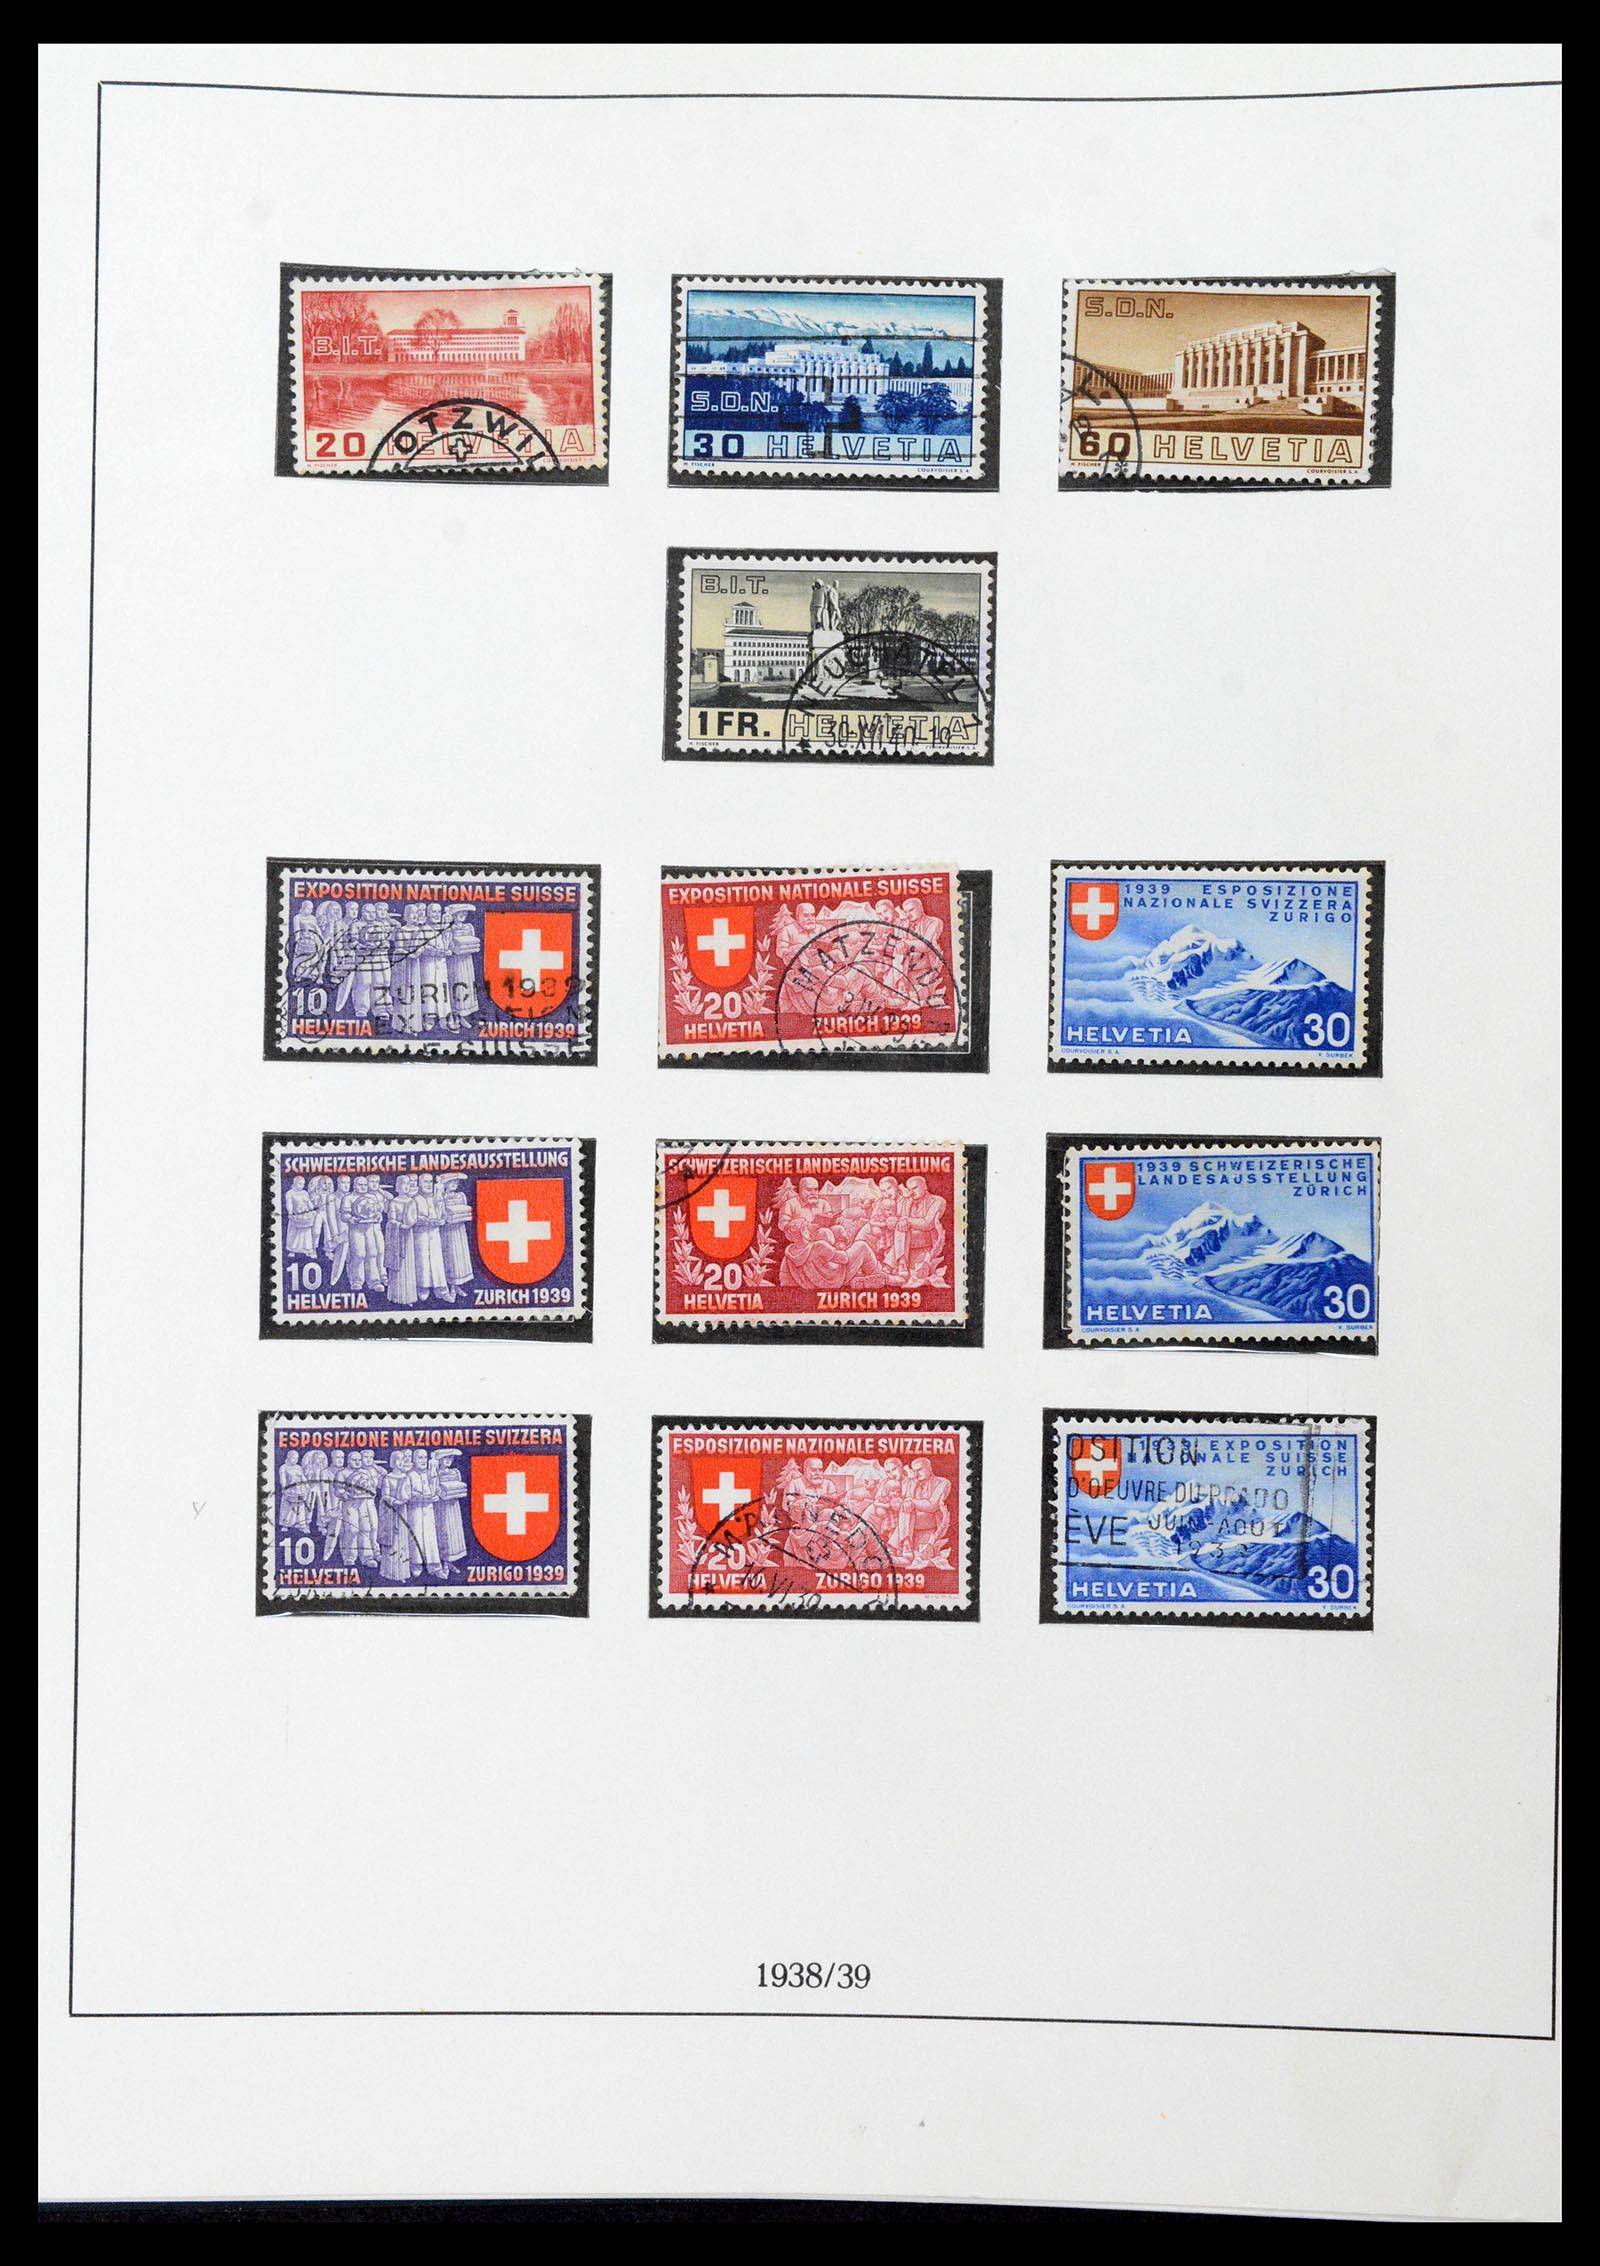 39235 0028 - Stamp collection 39235 Switzerland 1843-1960.